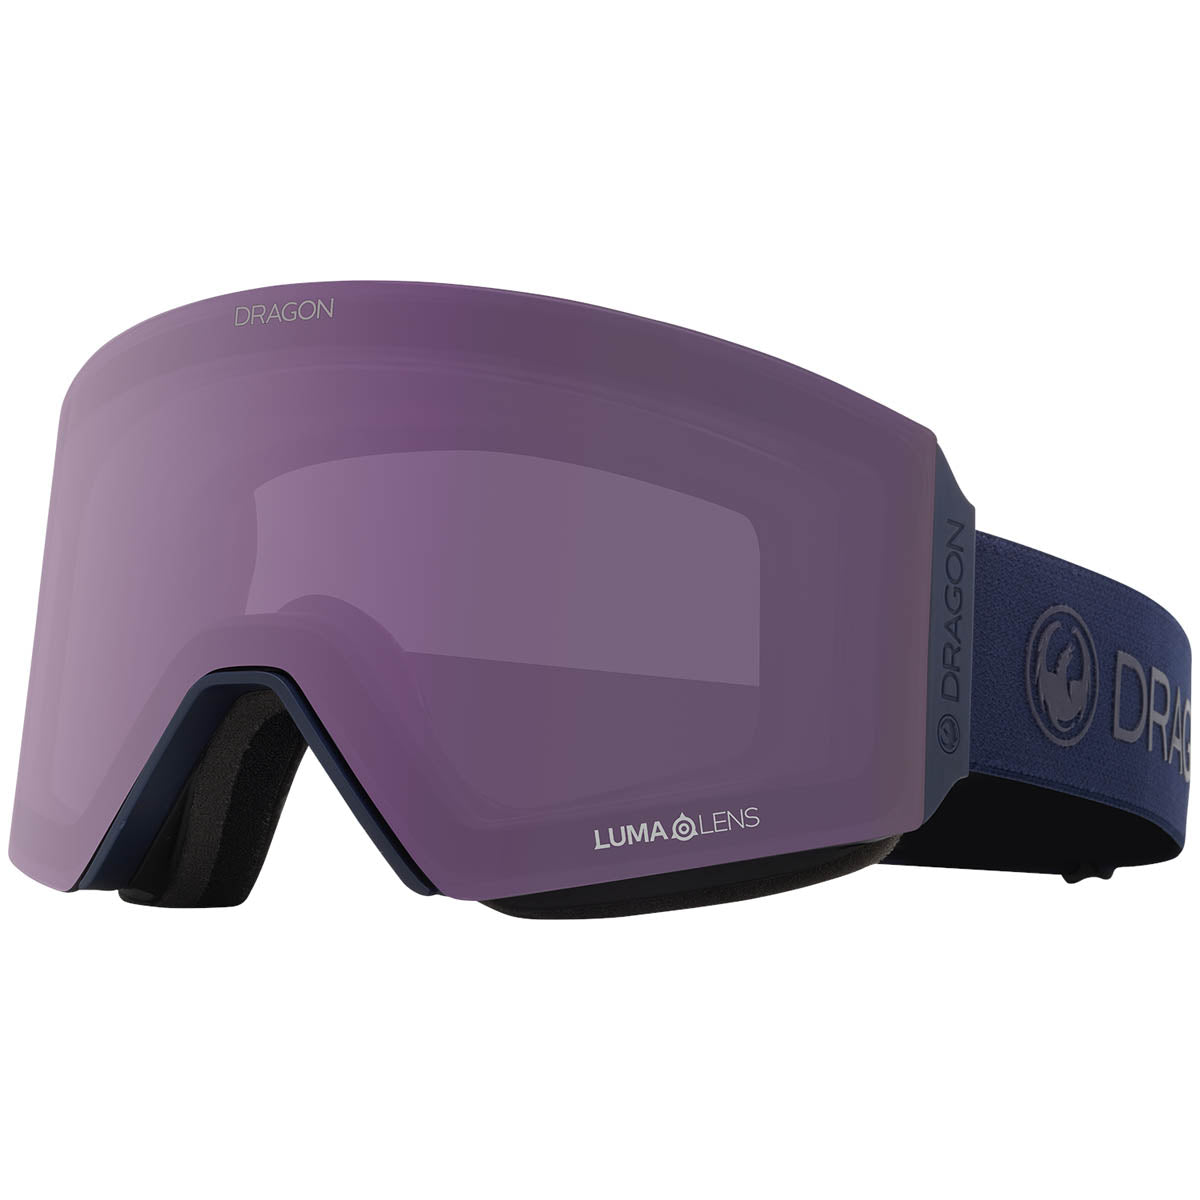 Dragon Rvx Mag Otg Snowboard Goggles - Shadow/Lumalens Violet image 1